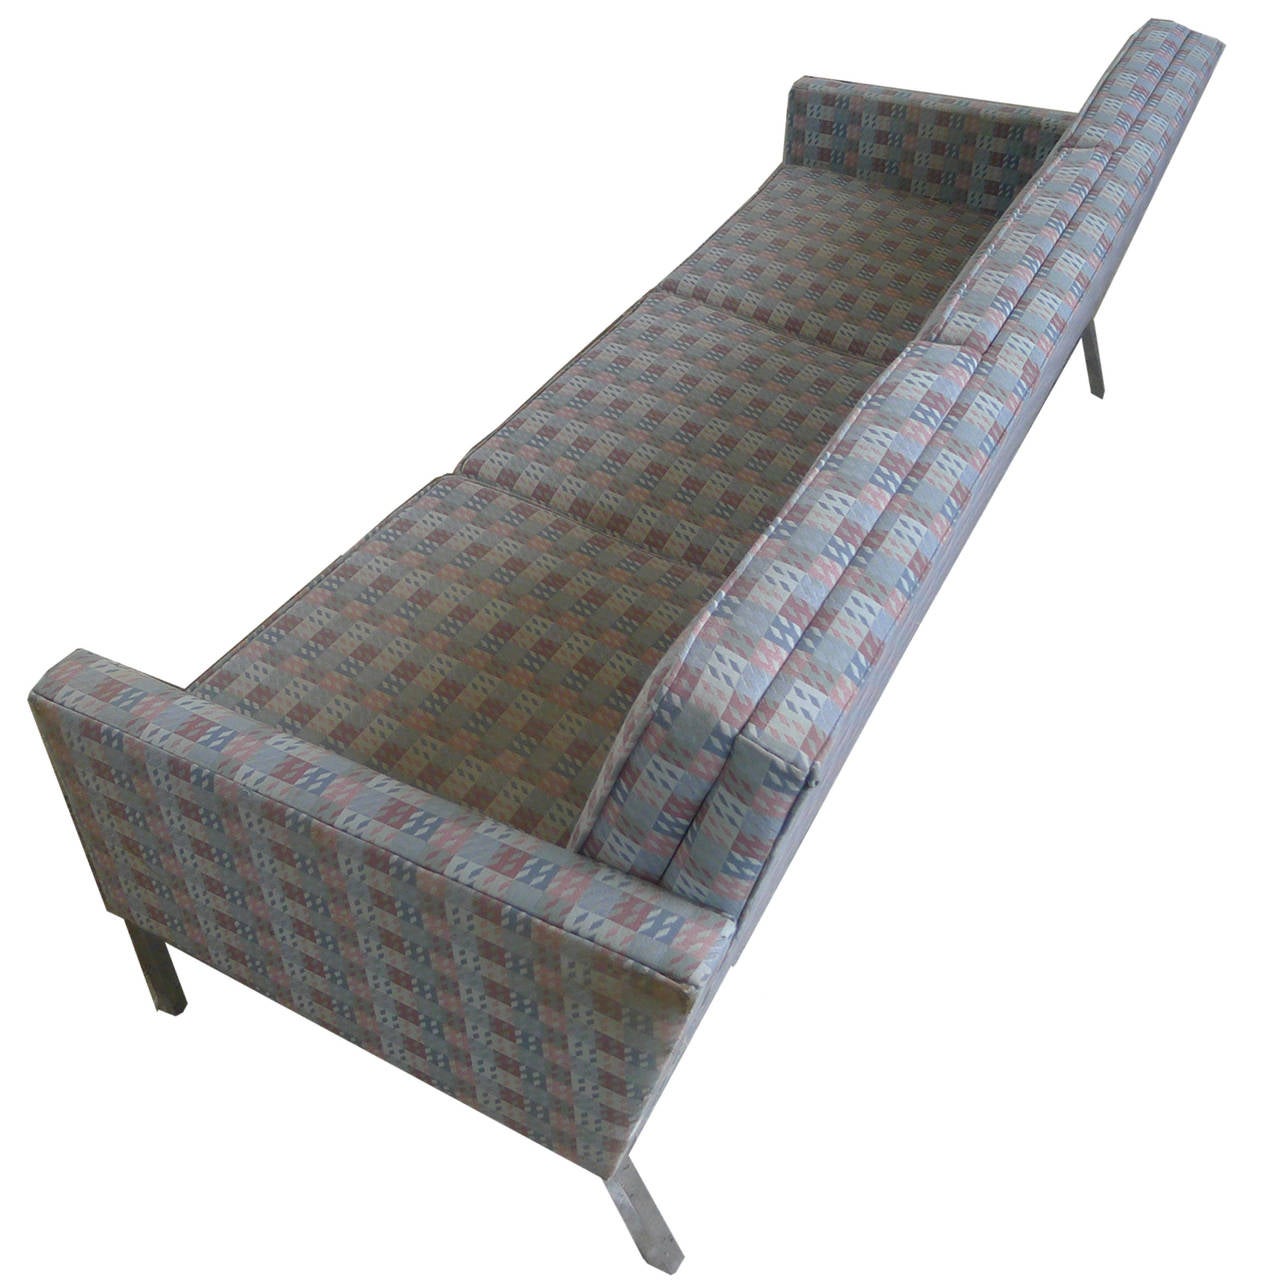 American Sleek Florence Knoll Style Three-Seat Sofa by Steelcase Chrome Base